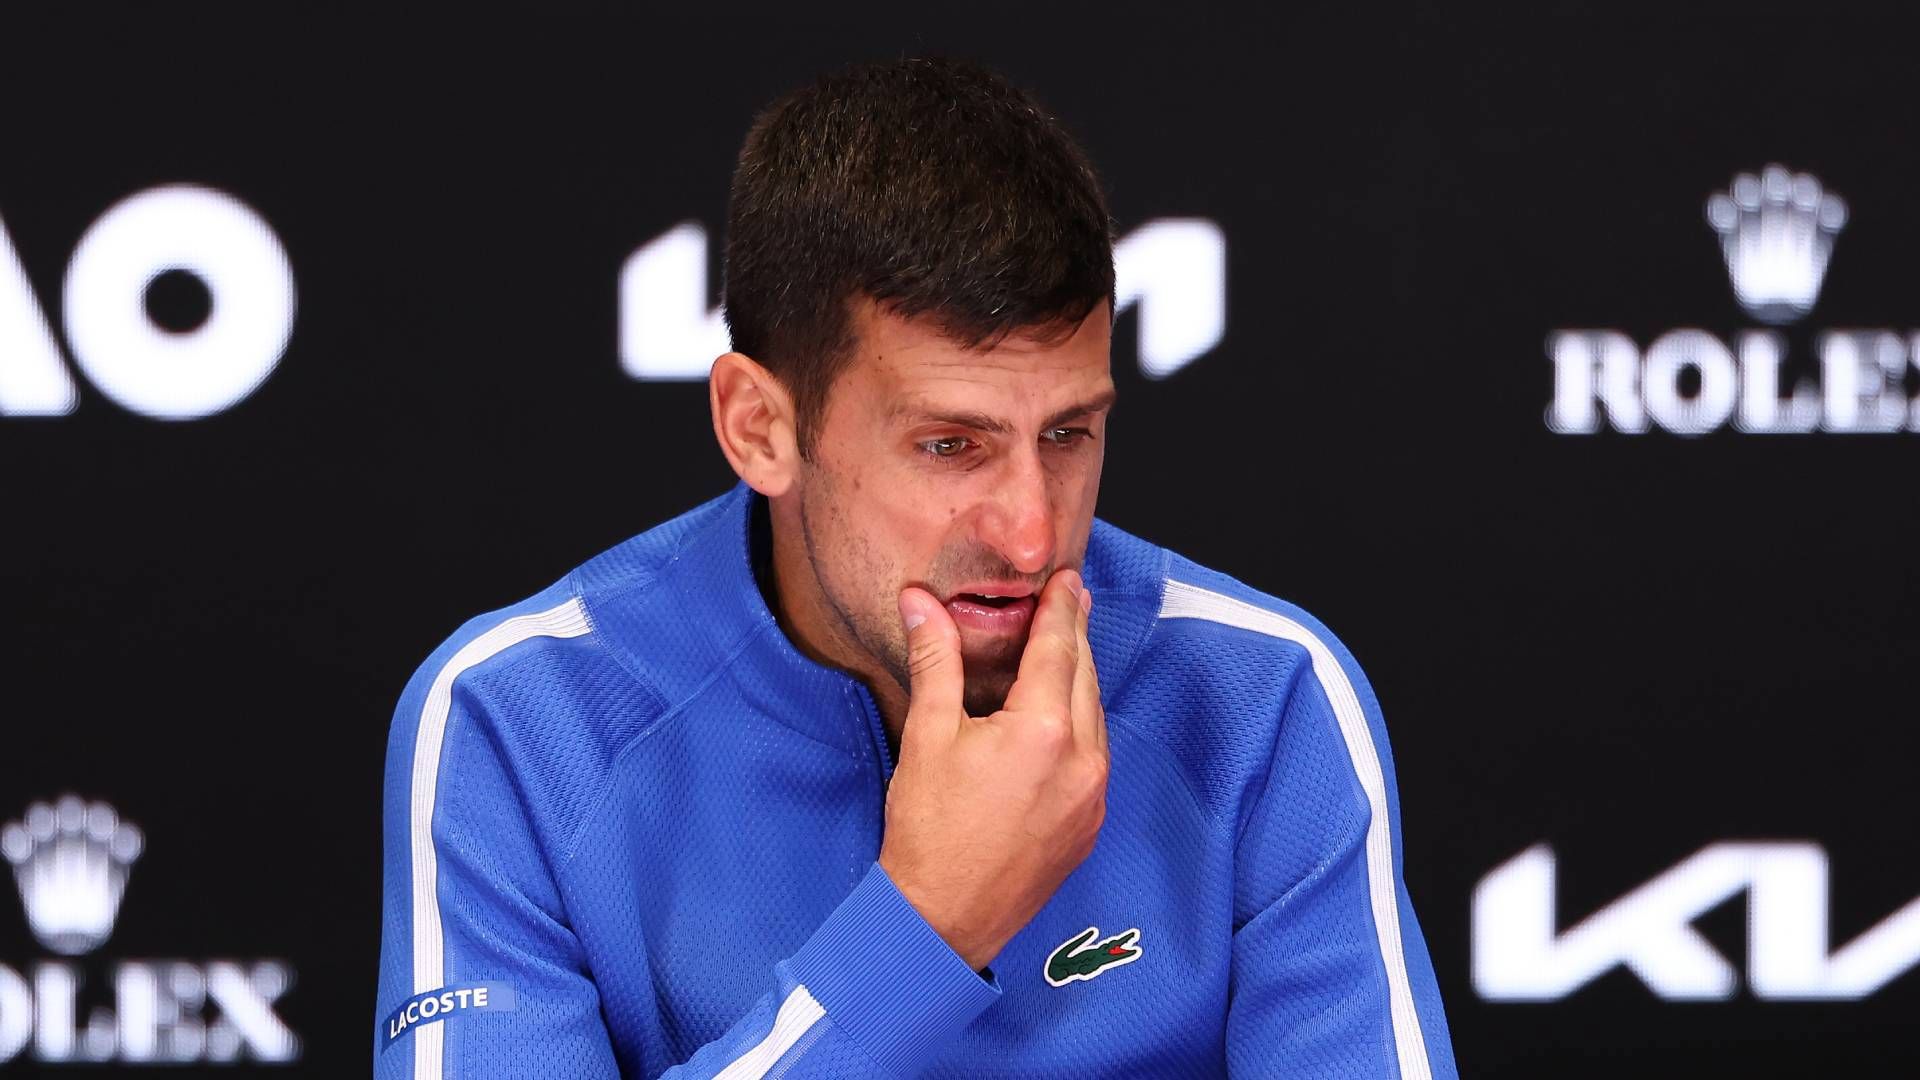 'One of the worst': Novak Djokovic 'shocked' after Australian Open exit